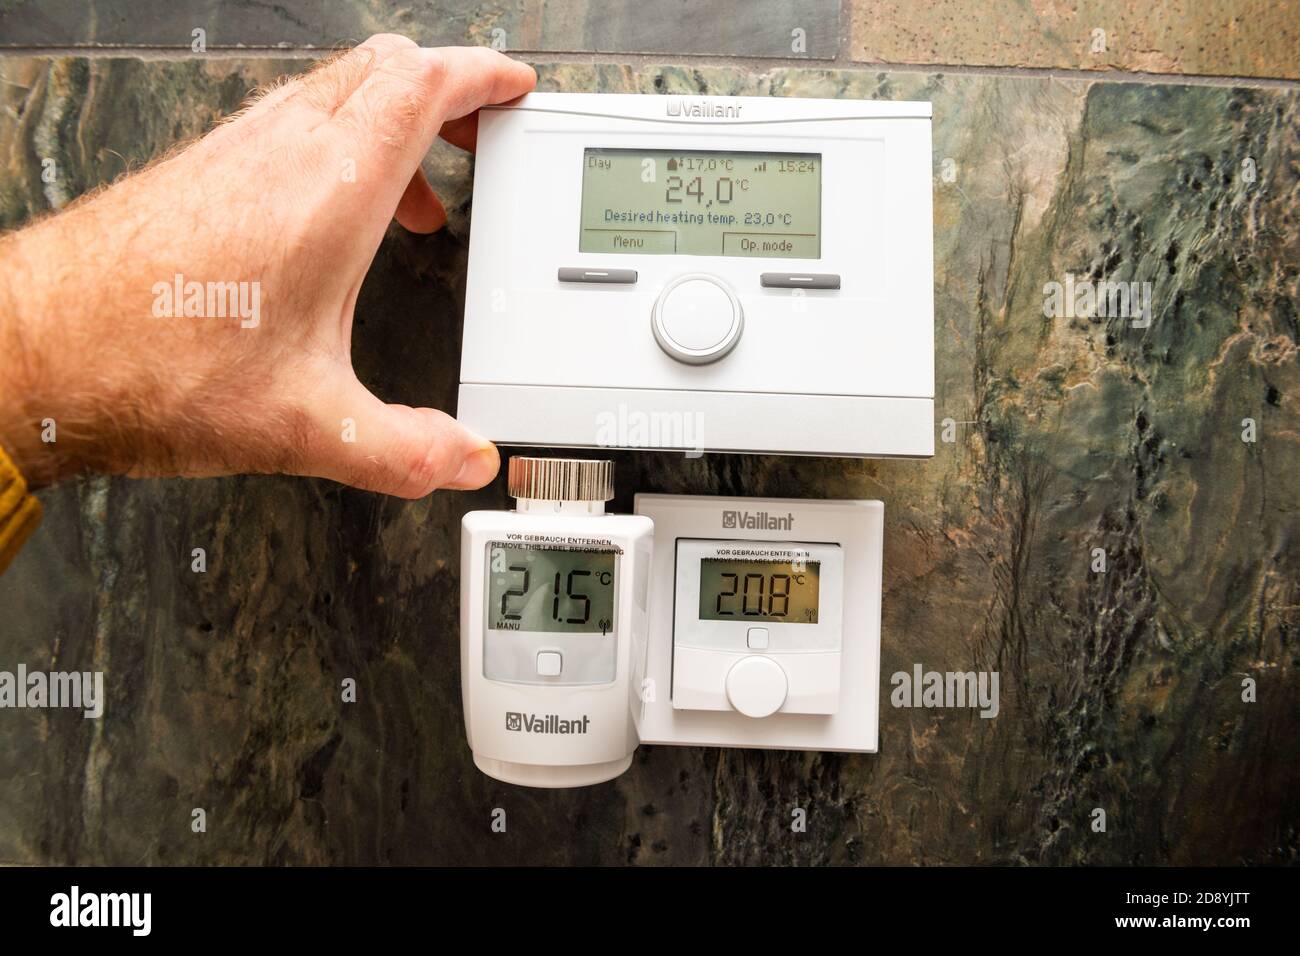 https://c8.alamy.com/compes/2d8yjtt/paris-francia-oct-25-2020-pov-man-mostrando-dispositivos-vaillant-iot-vrc-700f-termostatos-de-compensacion-meteorologica-valvula-termostatica-vr50-y-termostato-de-sala-ambisense-vr51-2d8yjtt.jpg